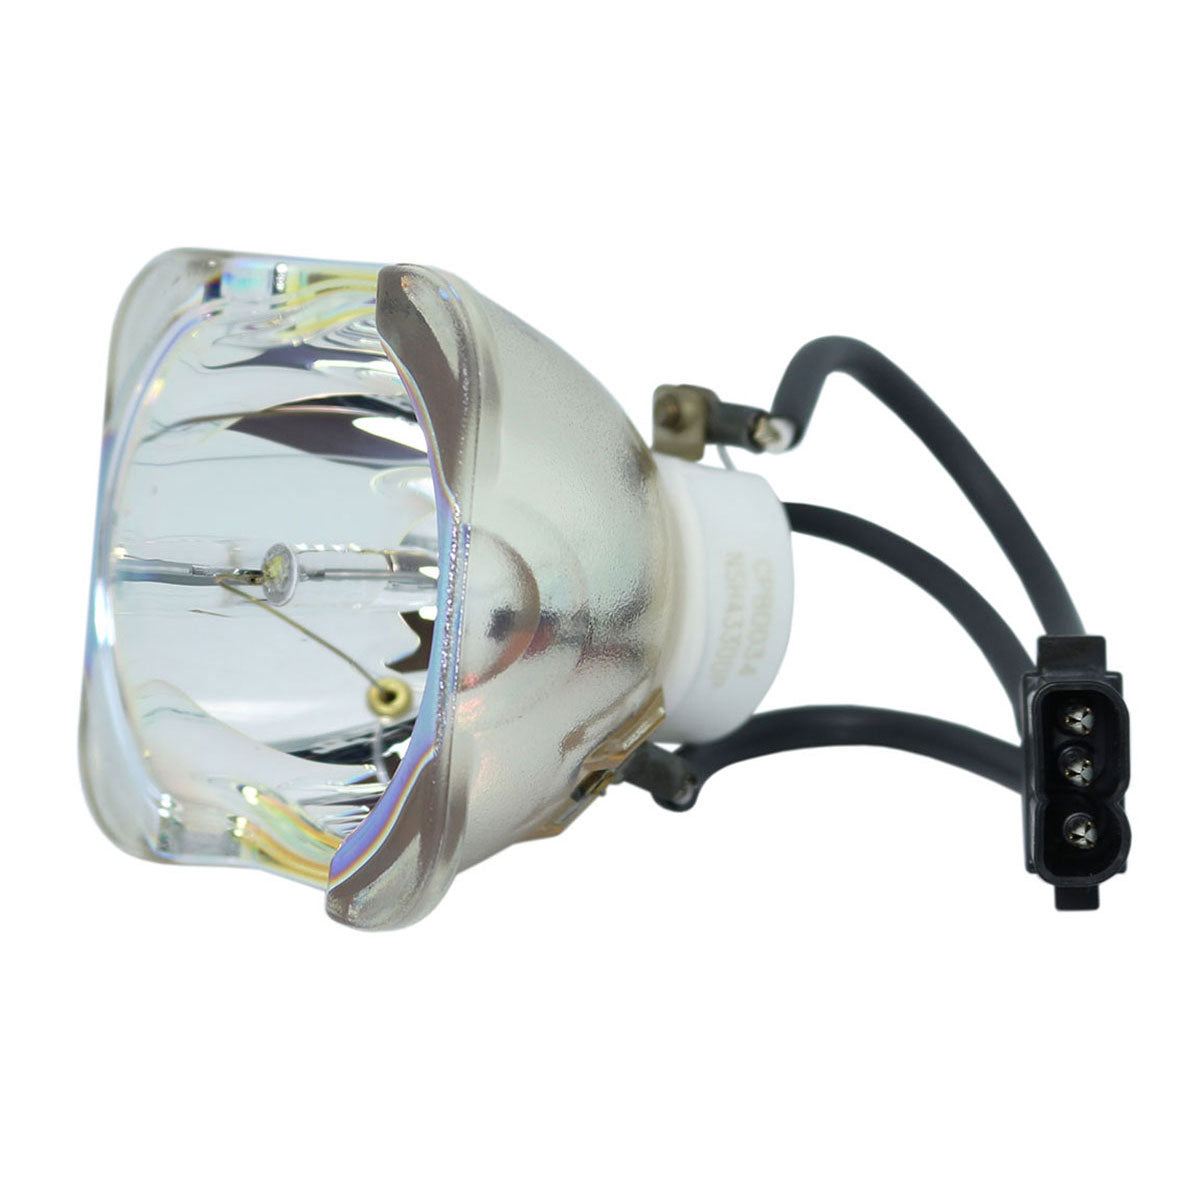 ASK Proxima 420029500 Ushio Projector Bare Lamp